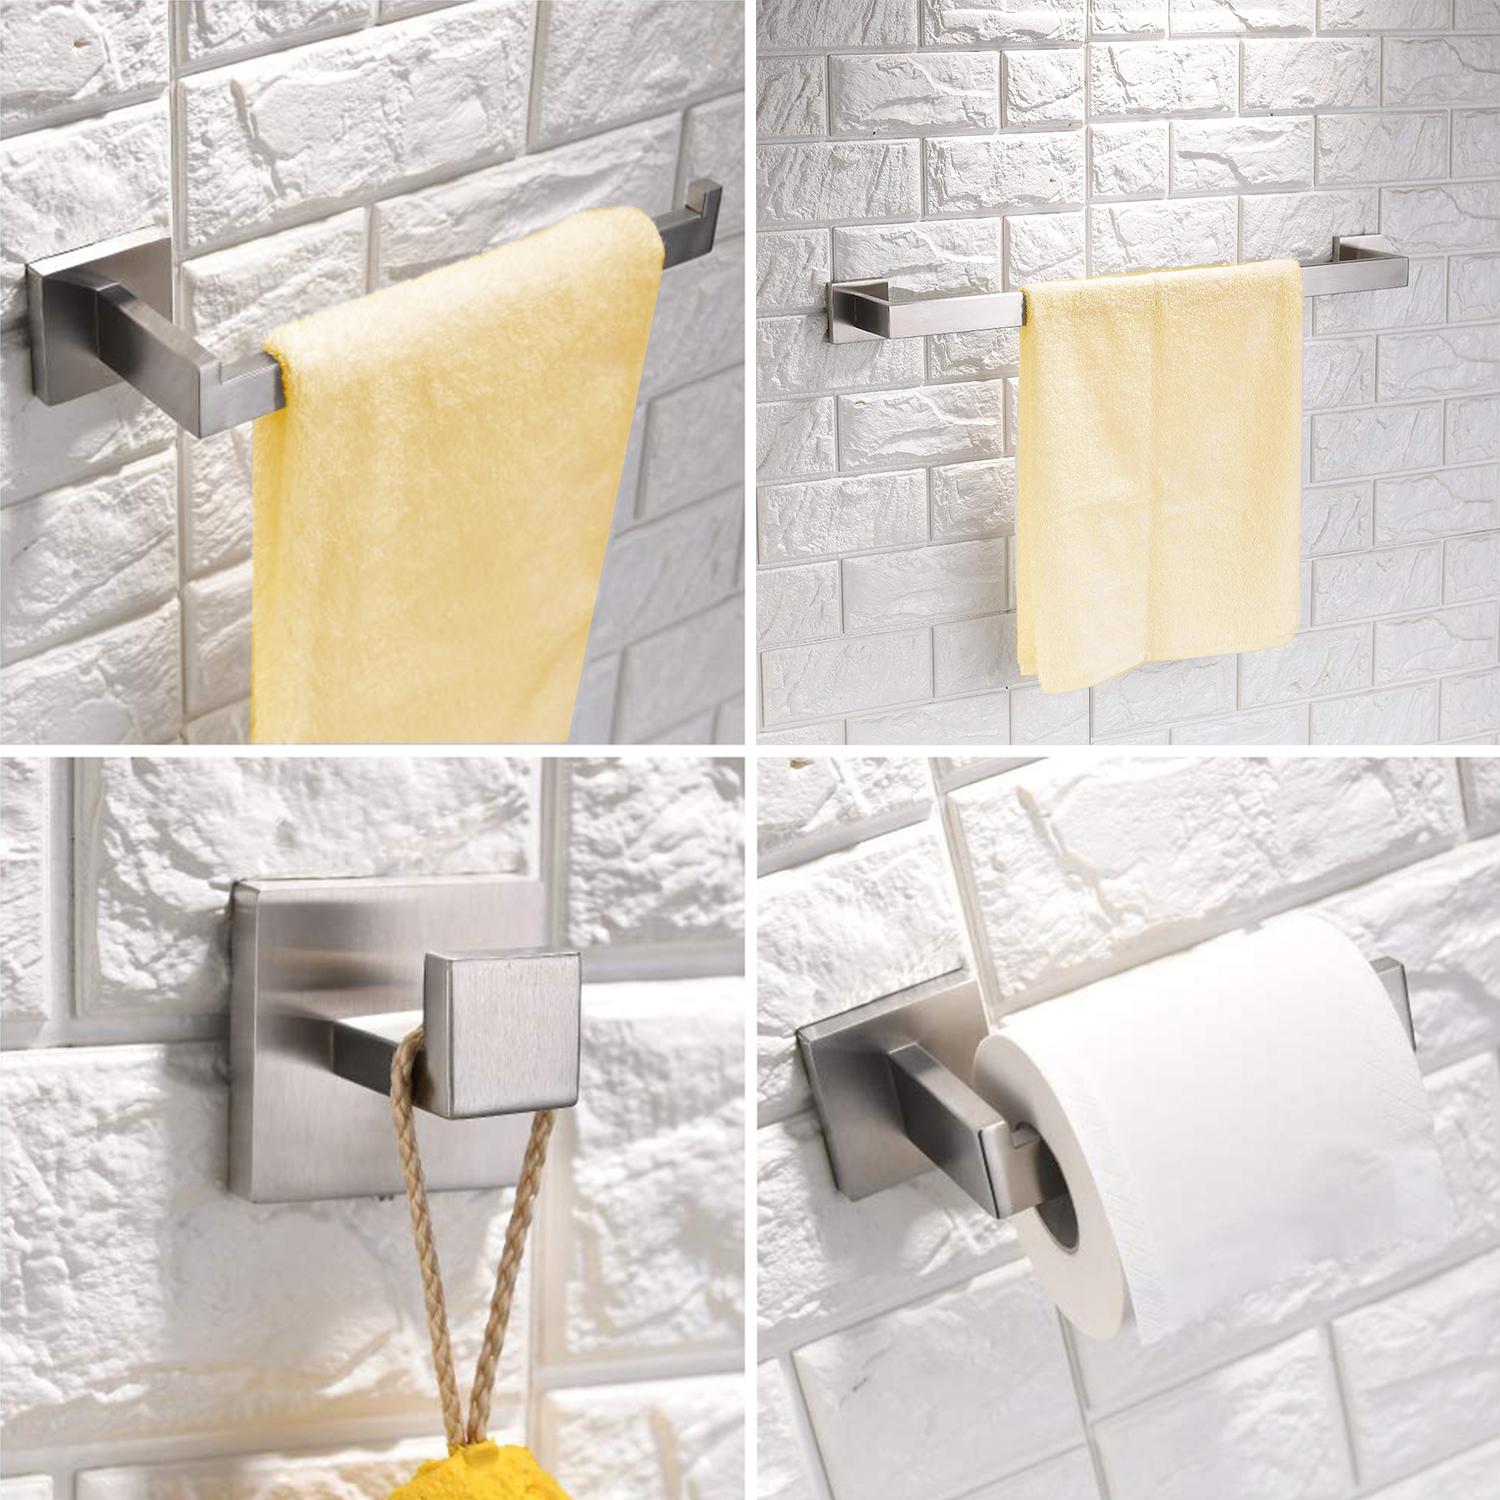 Paper Towel Holder Towel Bar 4 Pieces Bathroom Hardware Accessories Set Brushed Nickel Finished Silver